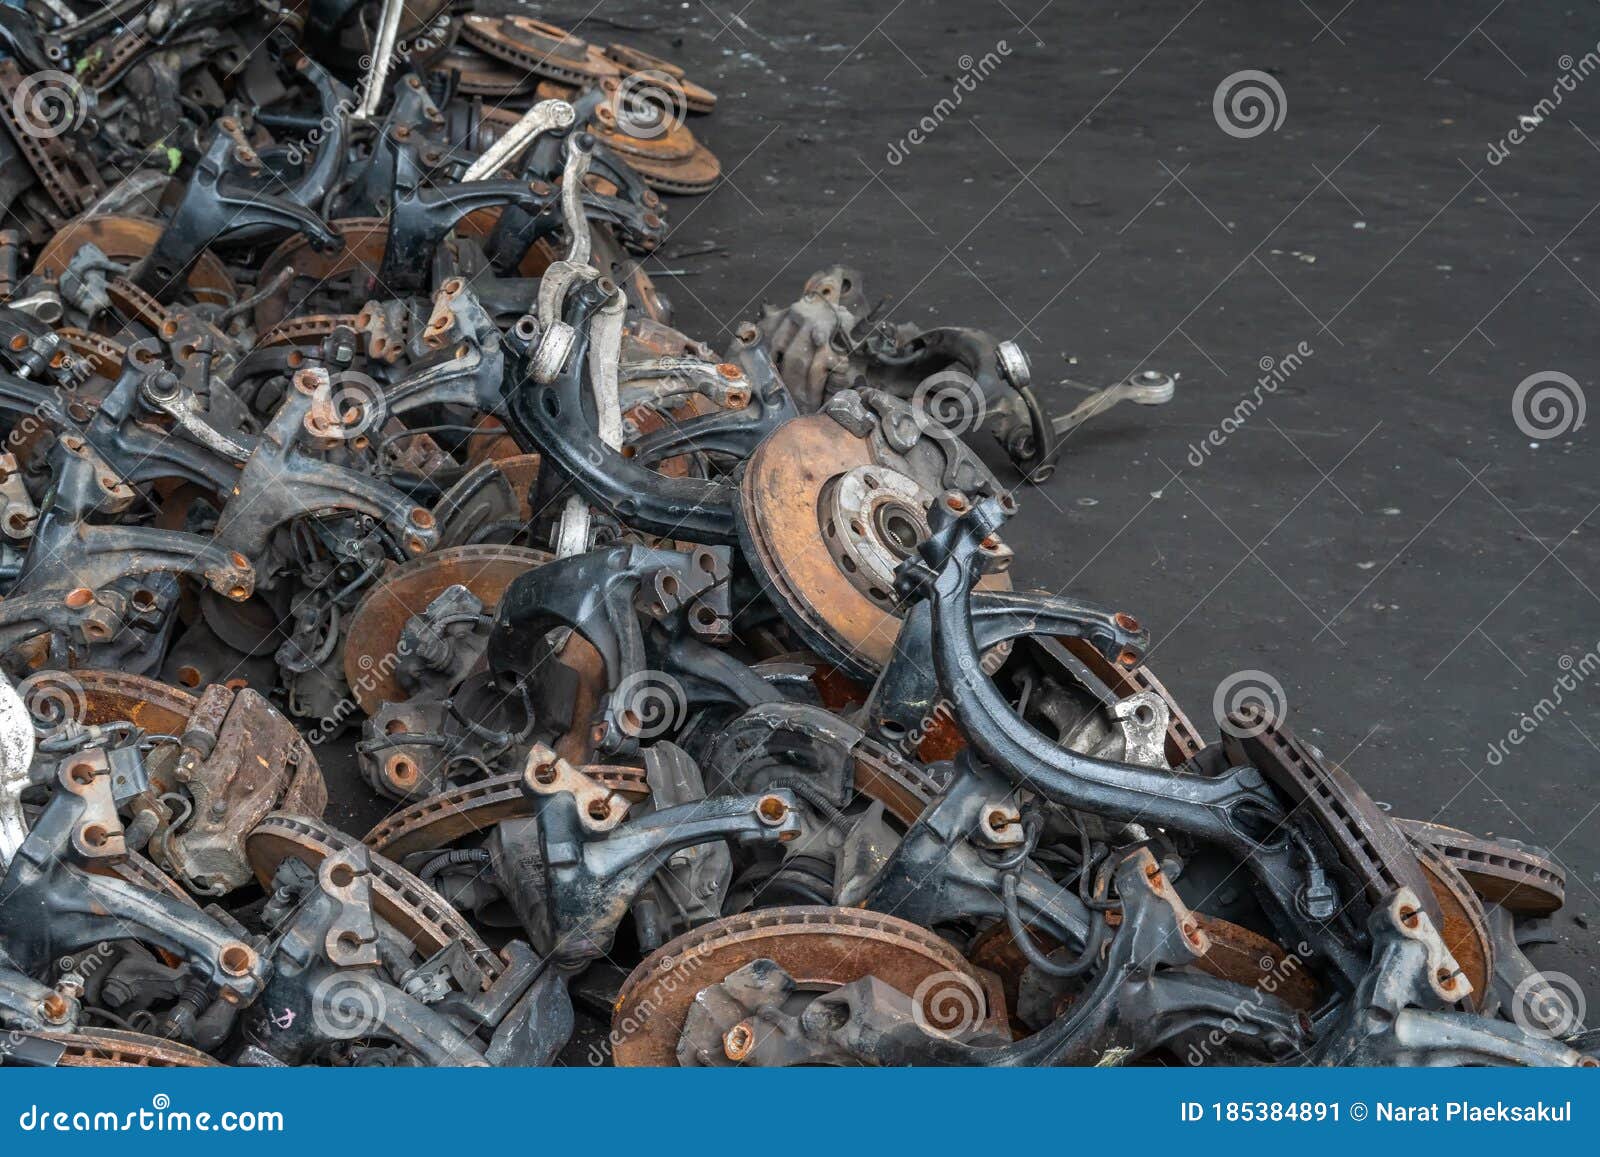 Used Brake Rotor and Car Part at Junkyard or Scrapyard for Recycling